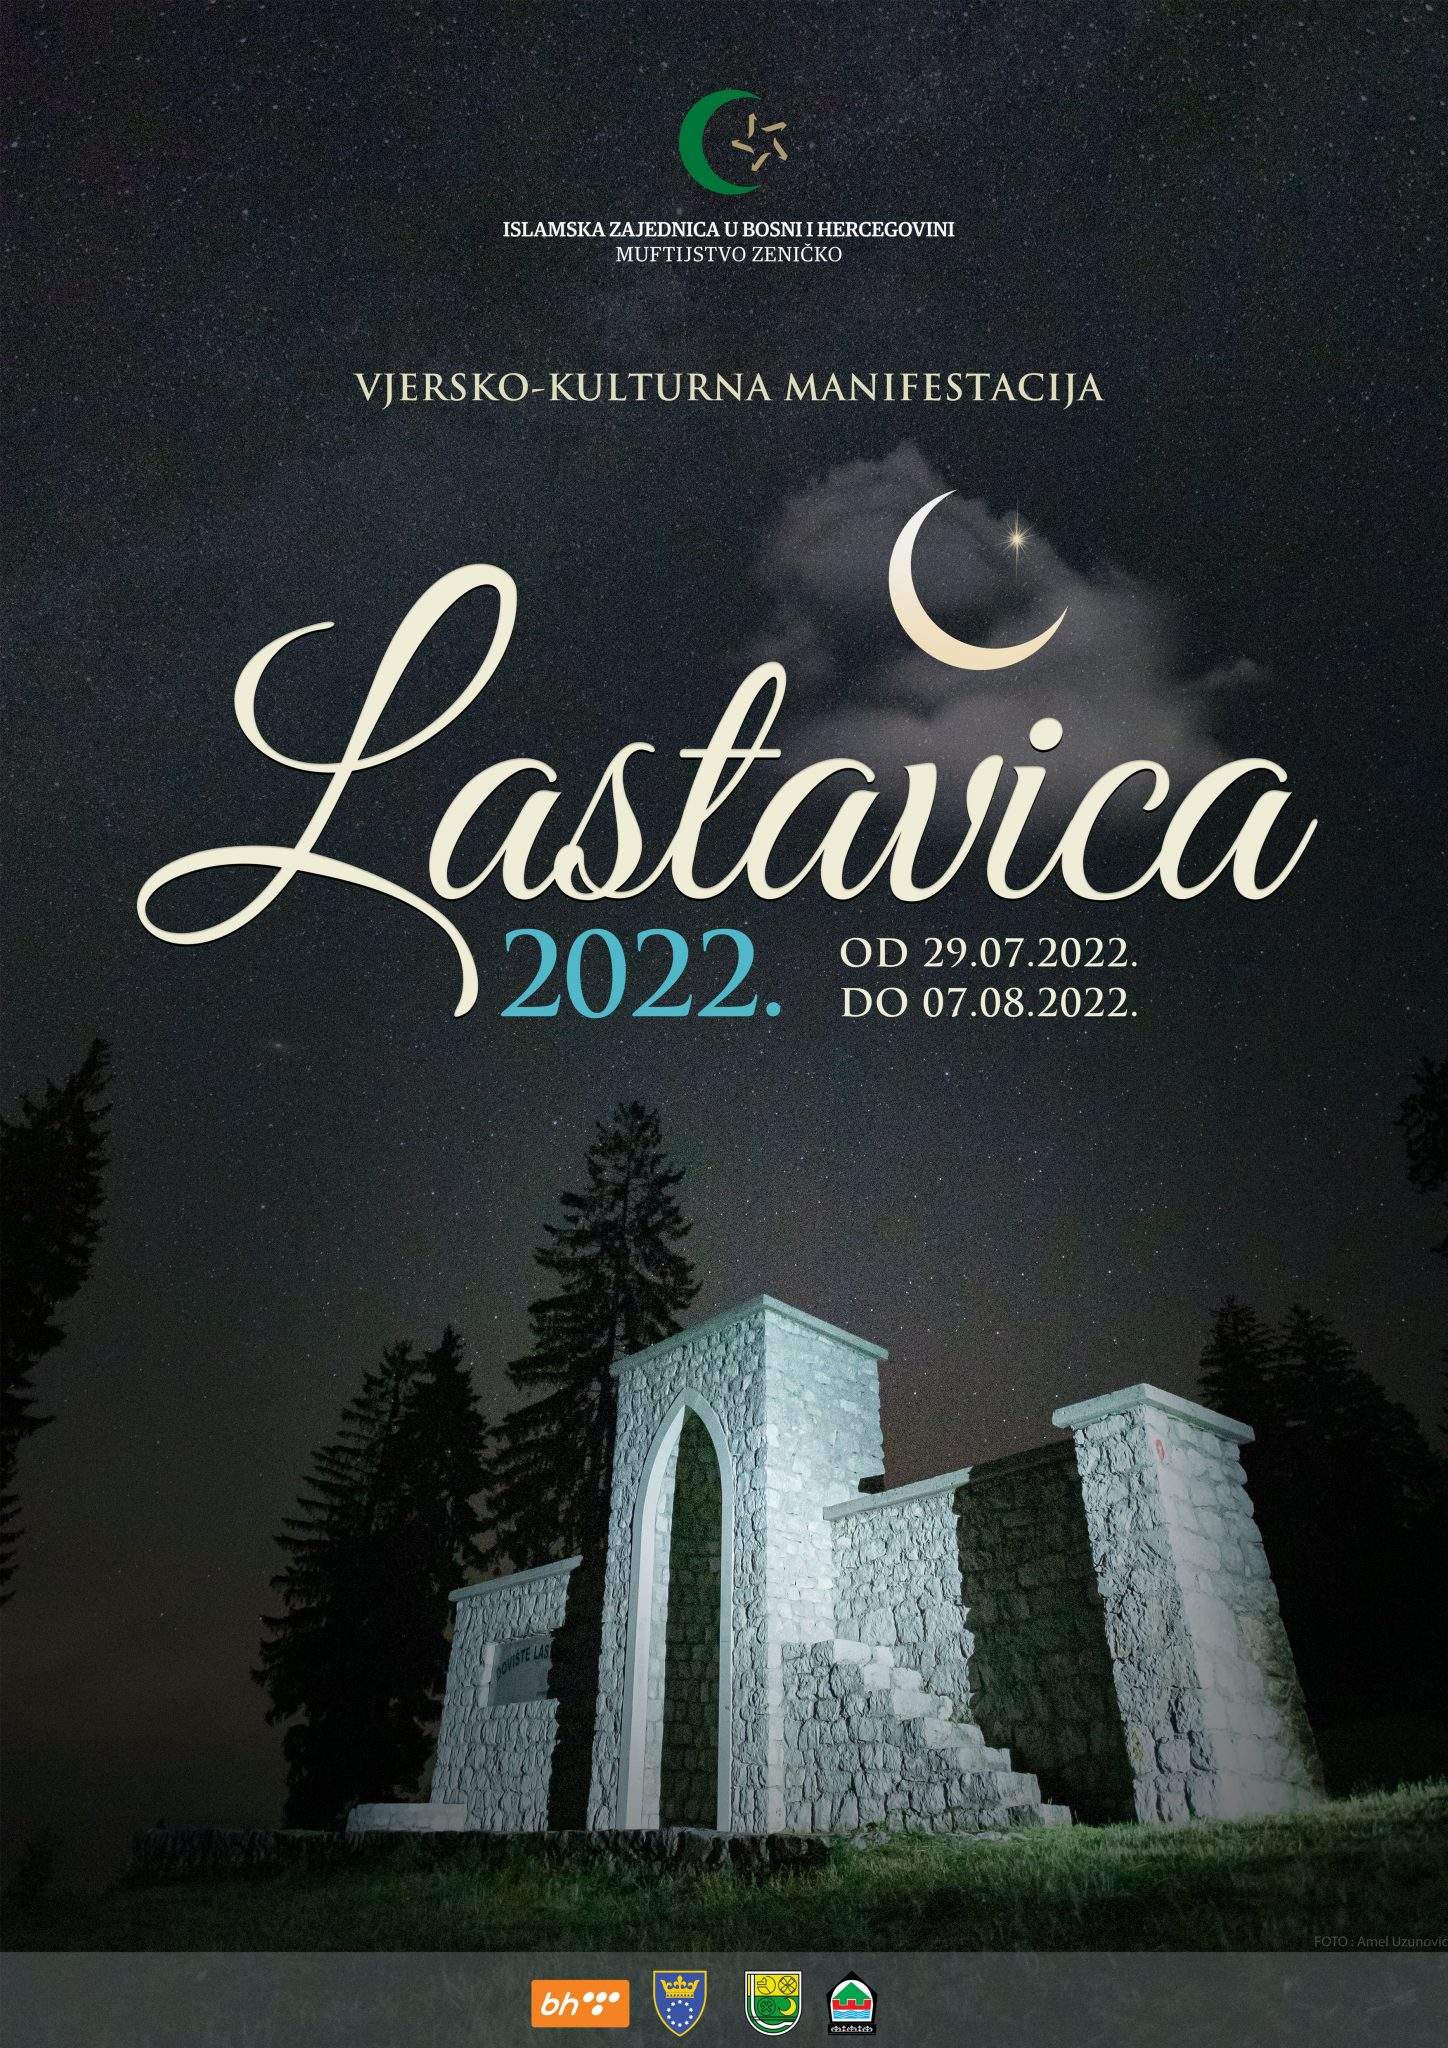 Lastavica 2022 plakata - Plan aktivnosti Vjersko-kulturne manifestacije “Lastavica 2022.”